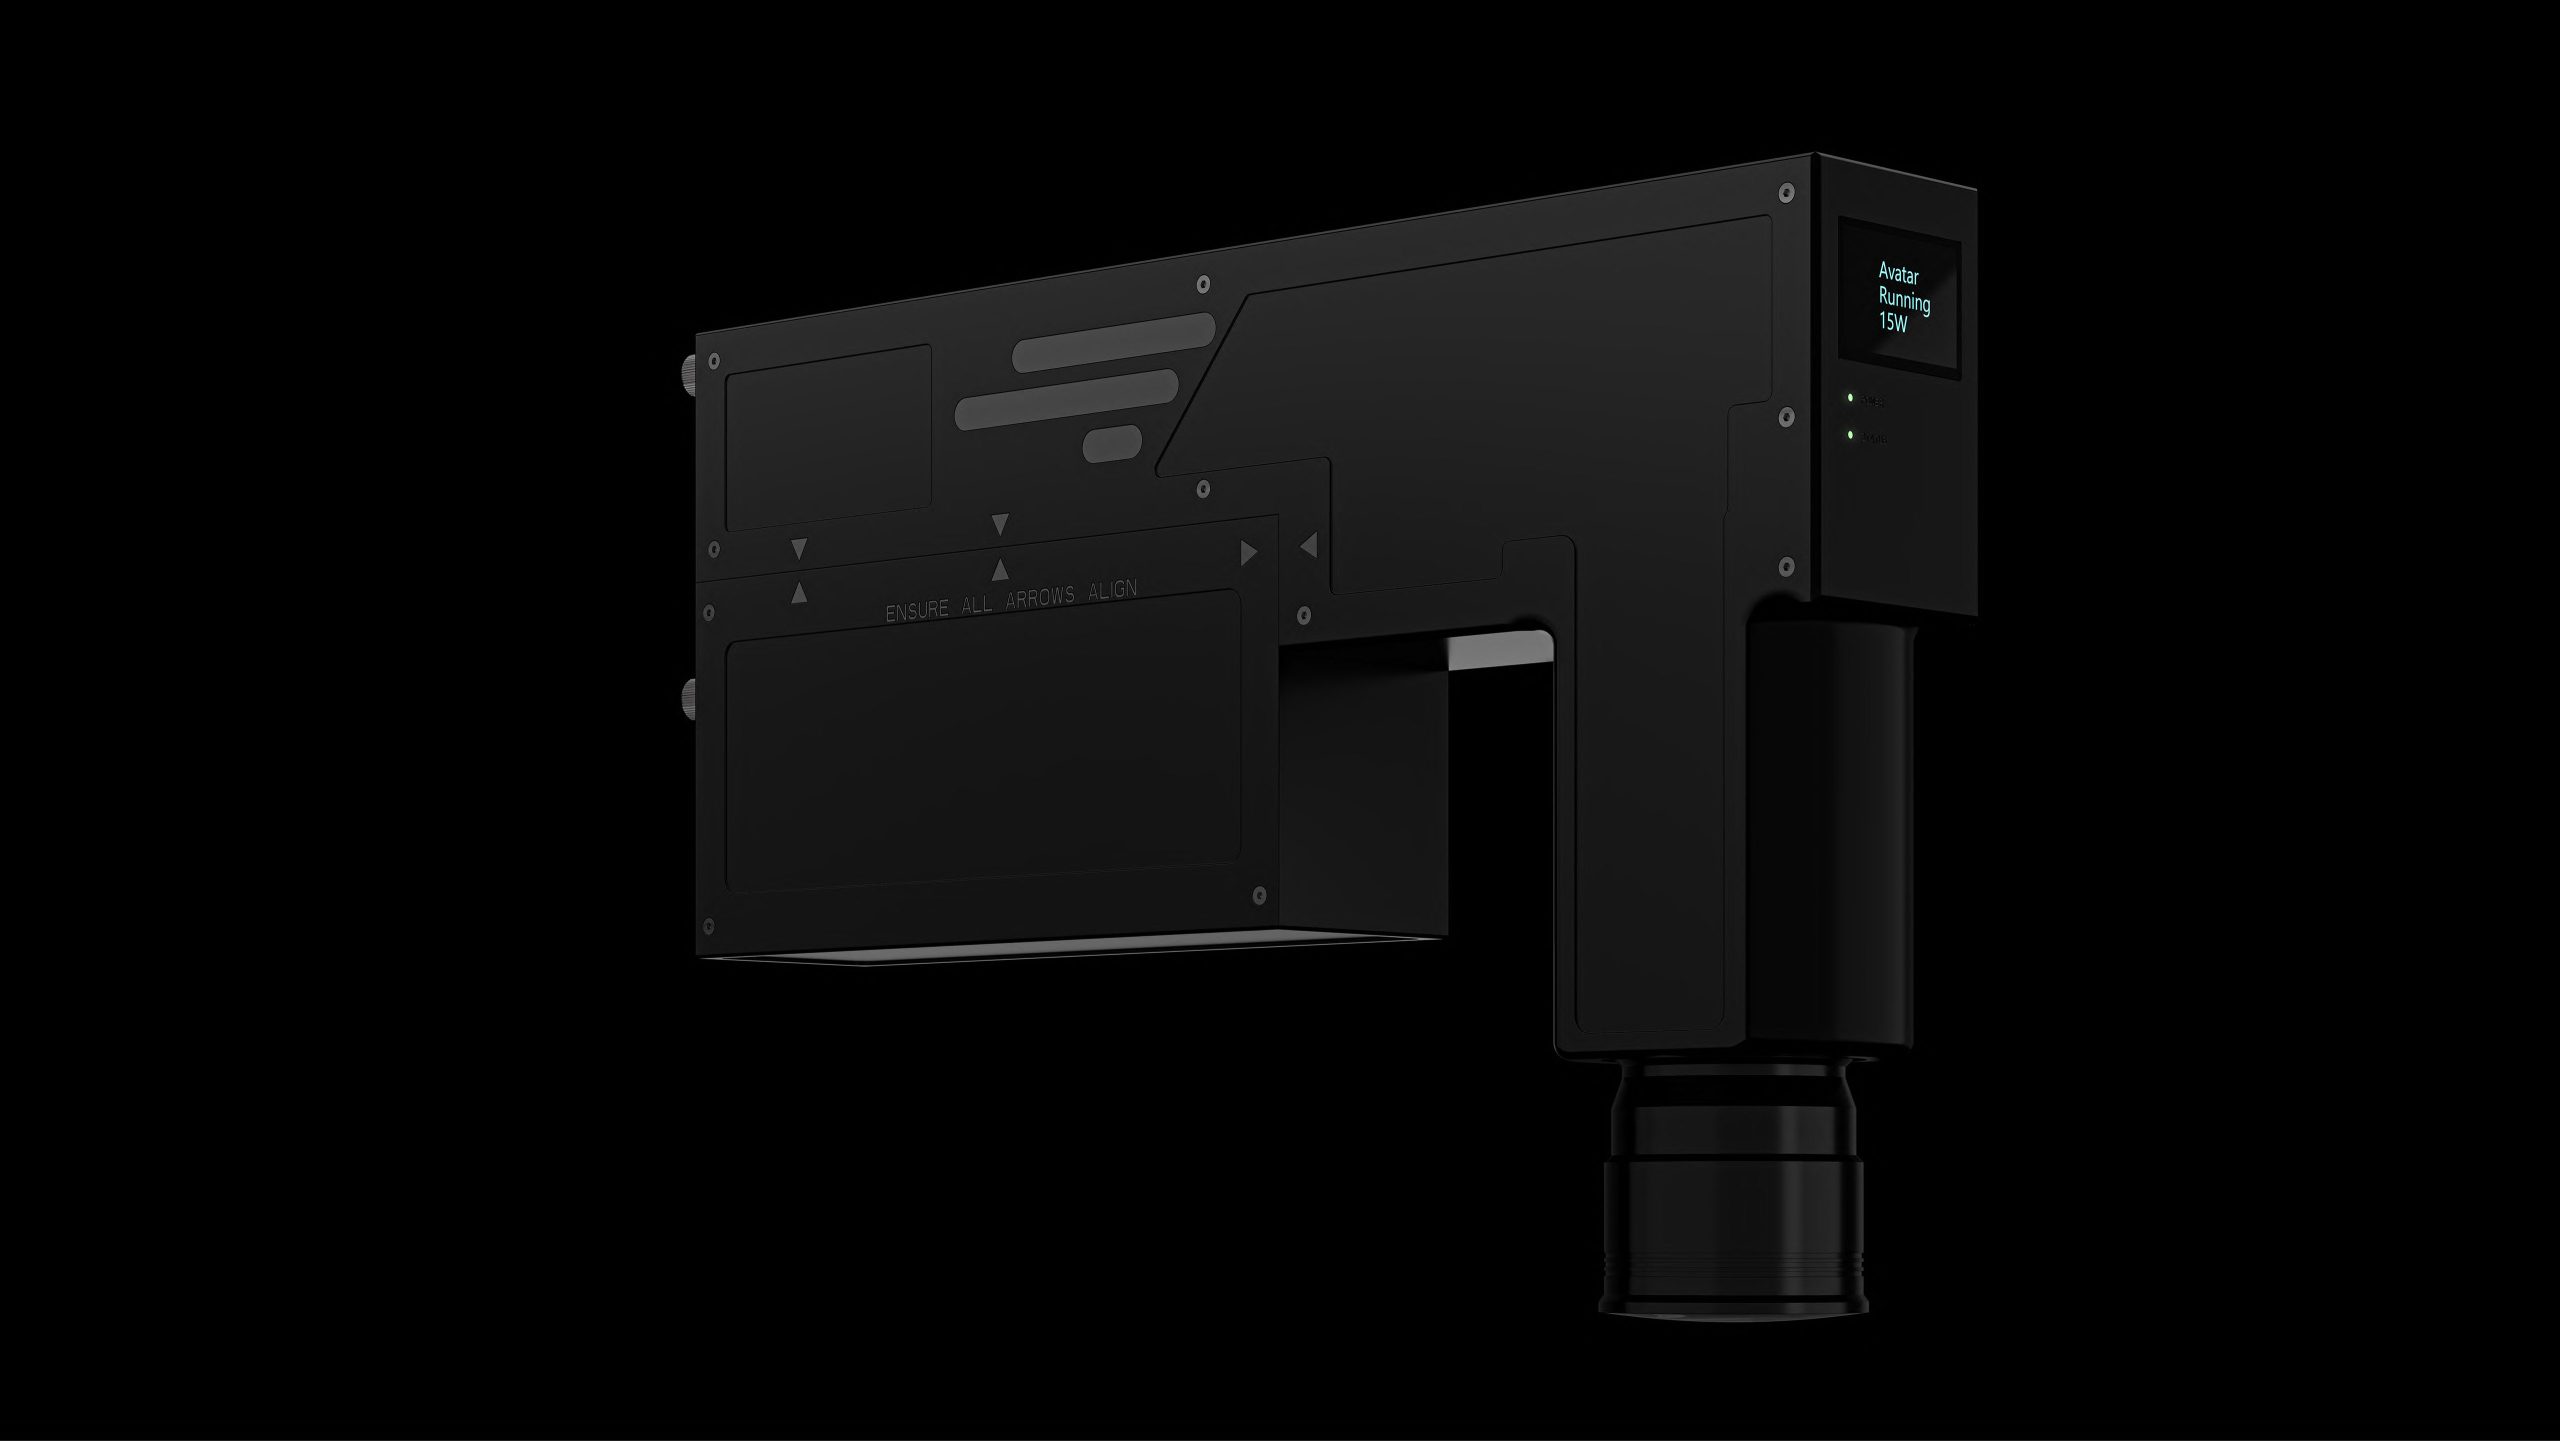 The AVATAR native 4K UV light projector. Image via Nejc Kilar/In-Vision.